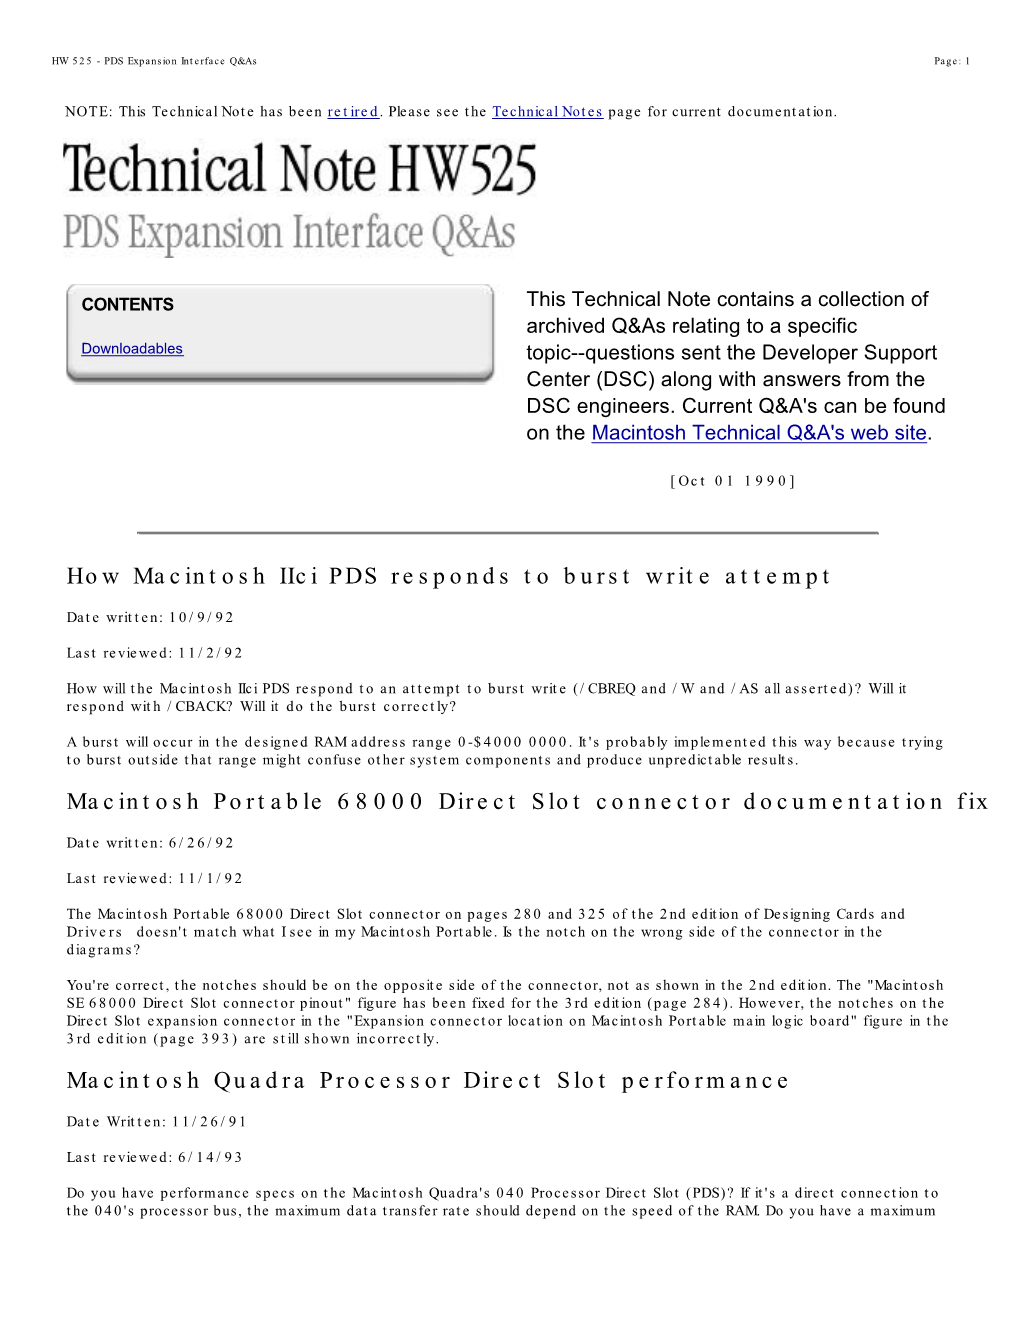 How Macintosh Iici PDS Responds to Burst Write Attempt Macintosh